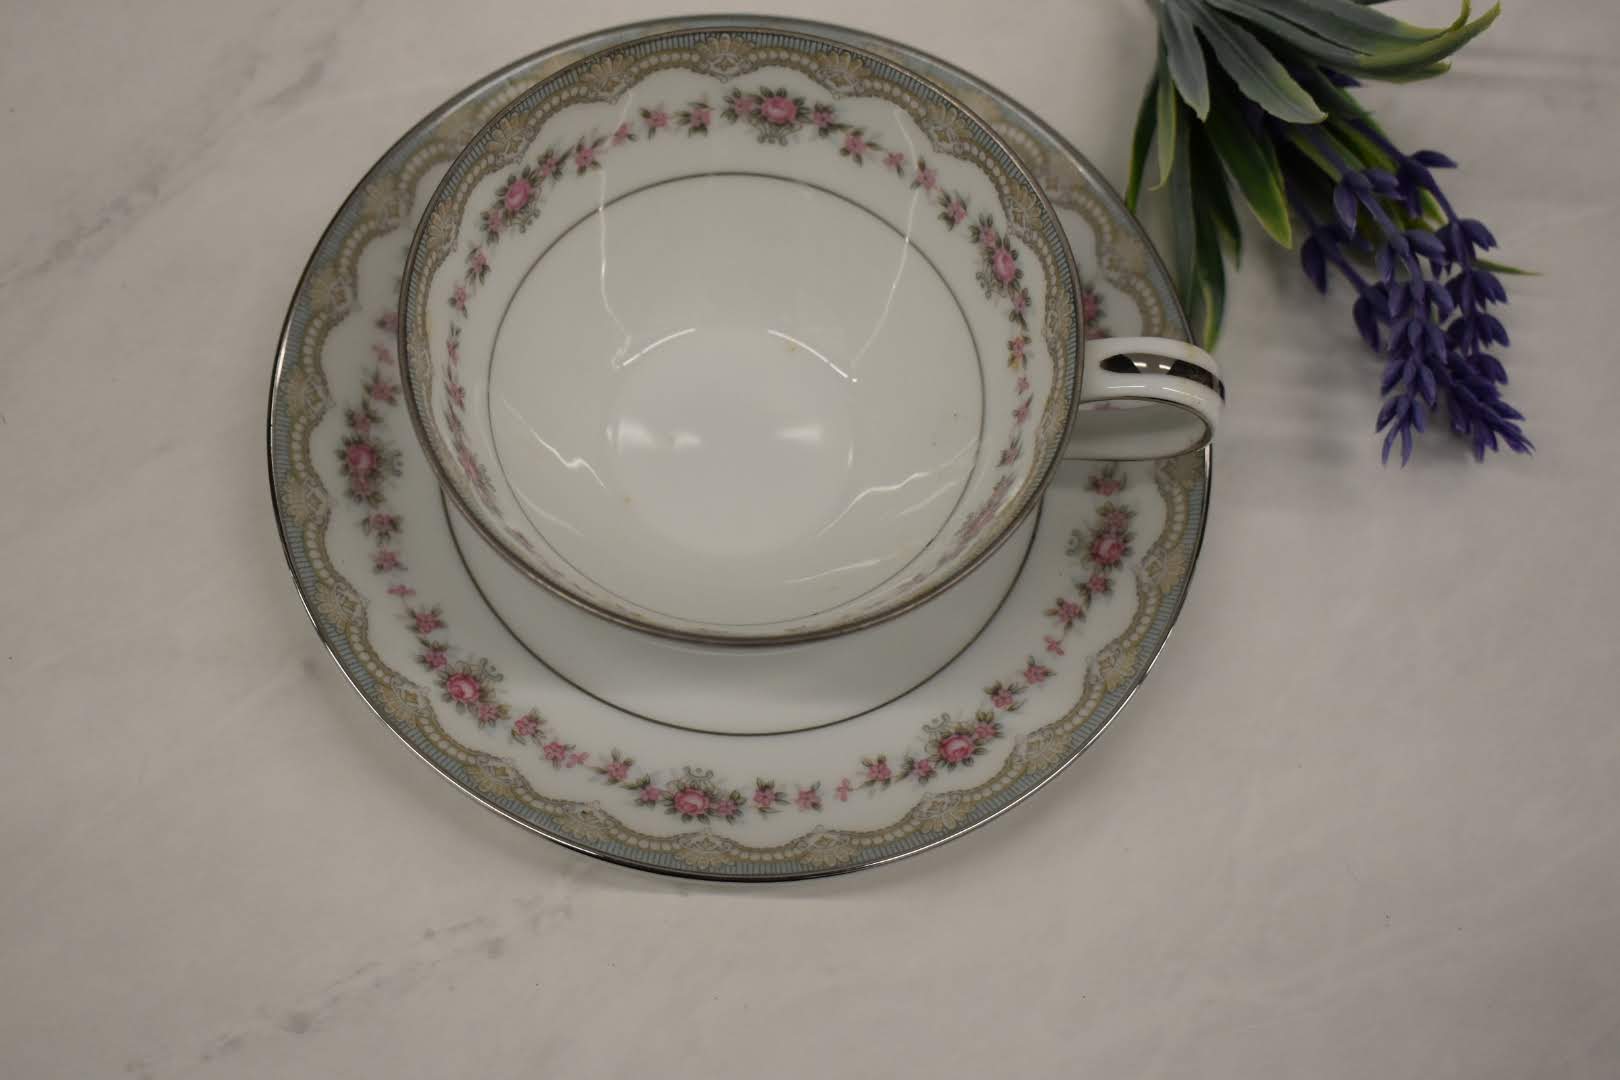 Noritake Glenwood - Fine Porcelain China - Platinum Rim - 5770 pattern - Cup and Saucer